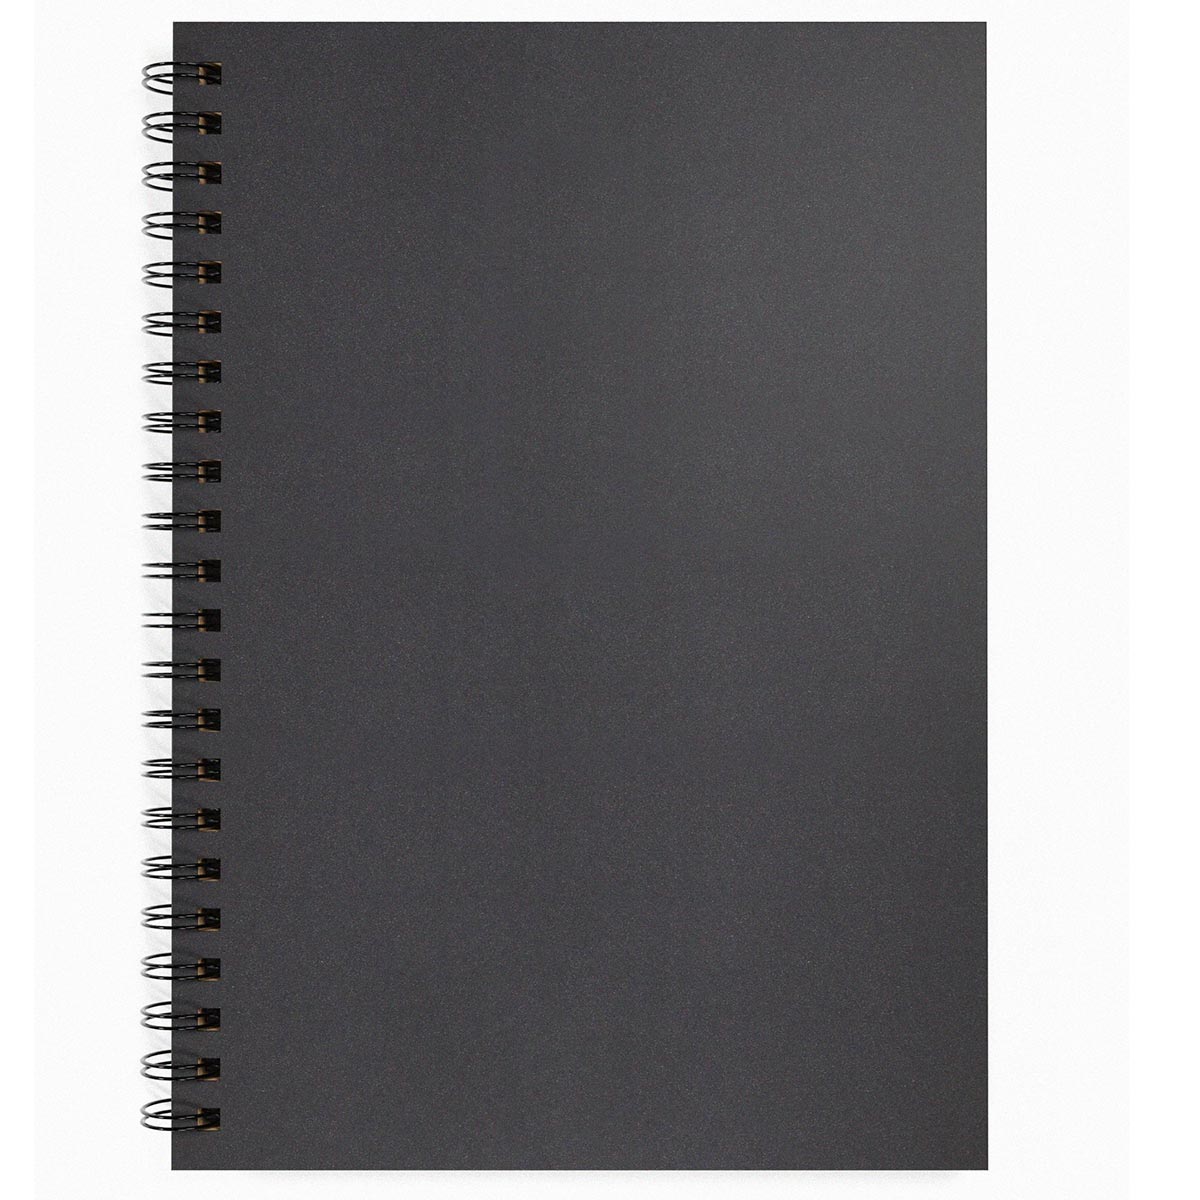 Artgecko - Shady Tan Paper Sketchbook - A4 Portrait